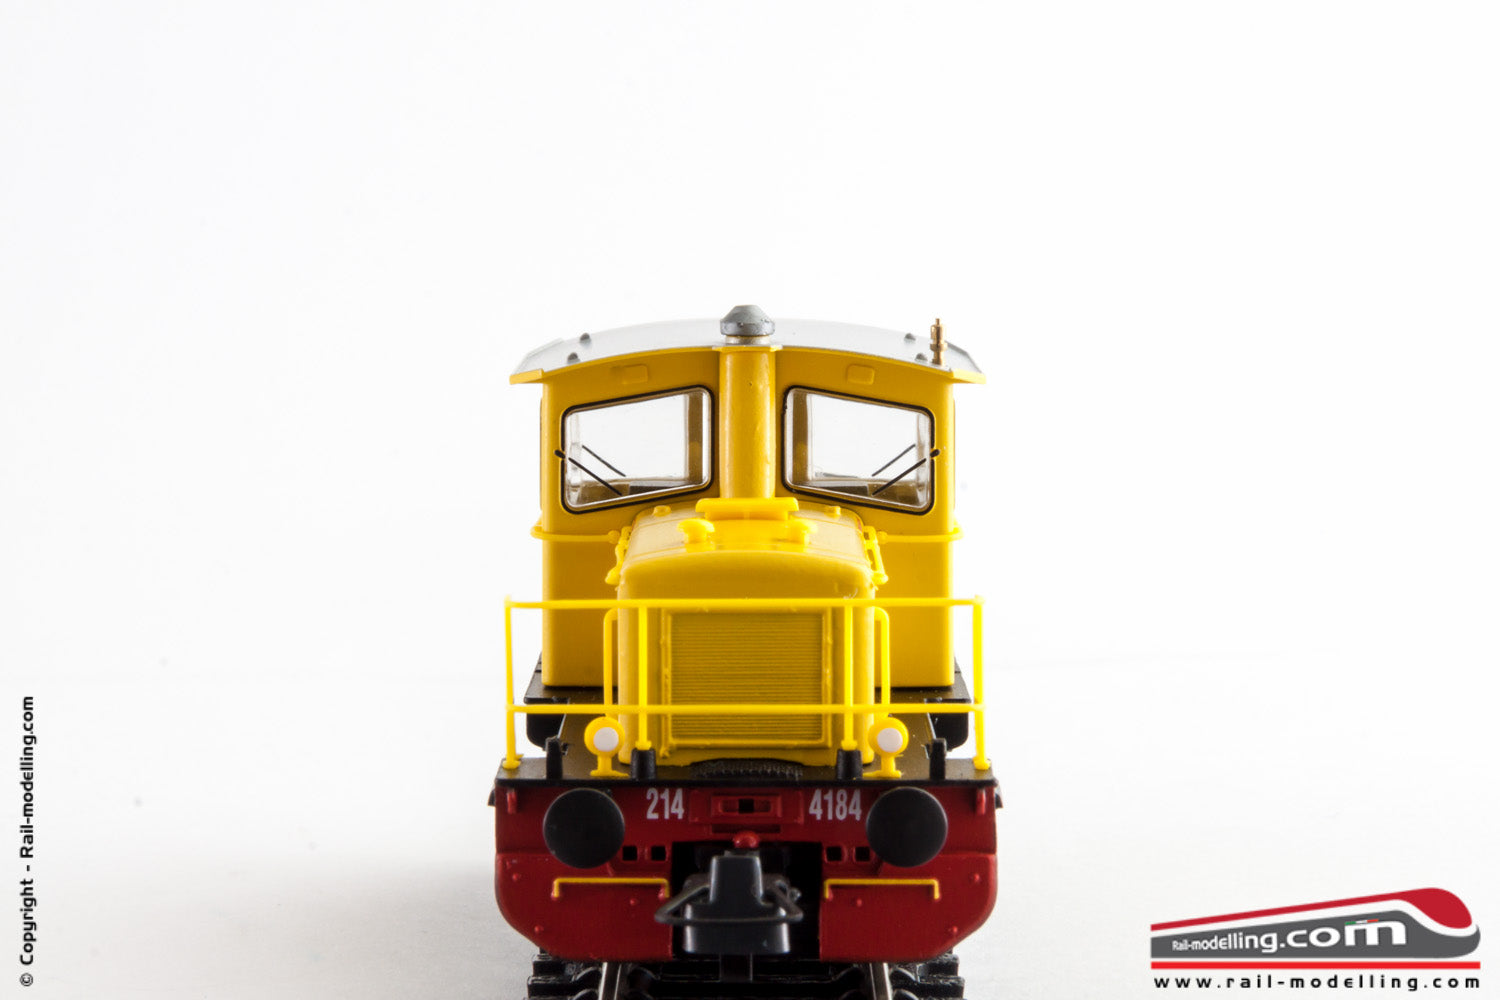 ROCO 52650 - H0 1:87 - Locomotiva da manovra FS RFI D 214 4184 livrea gialla